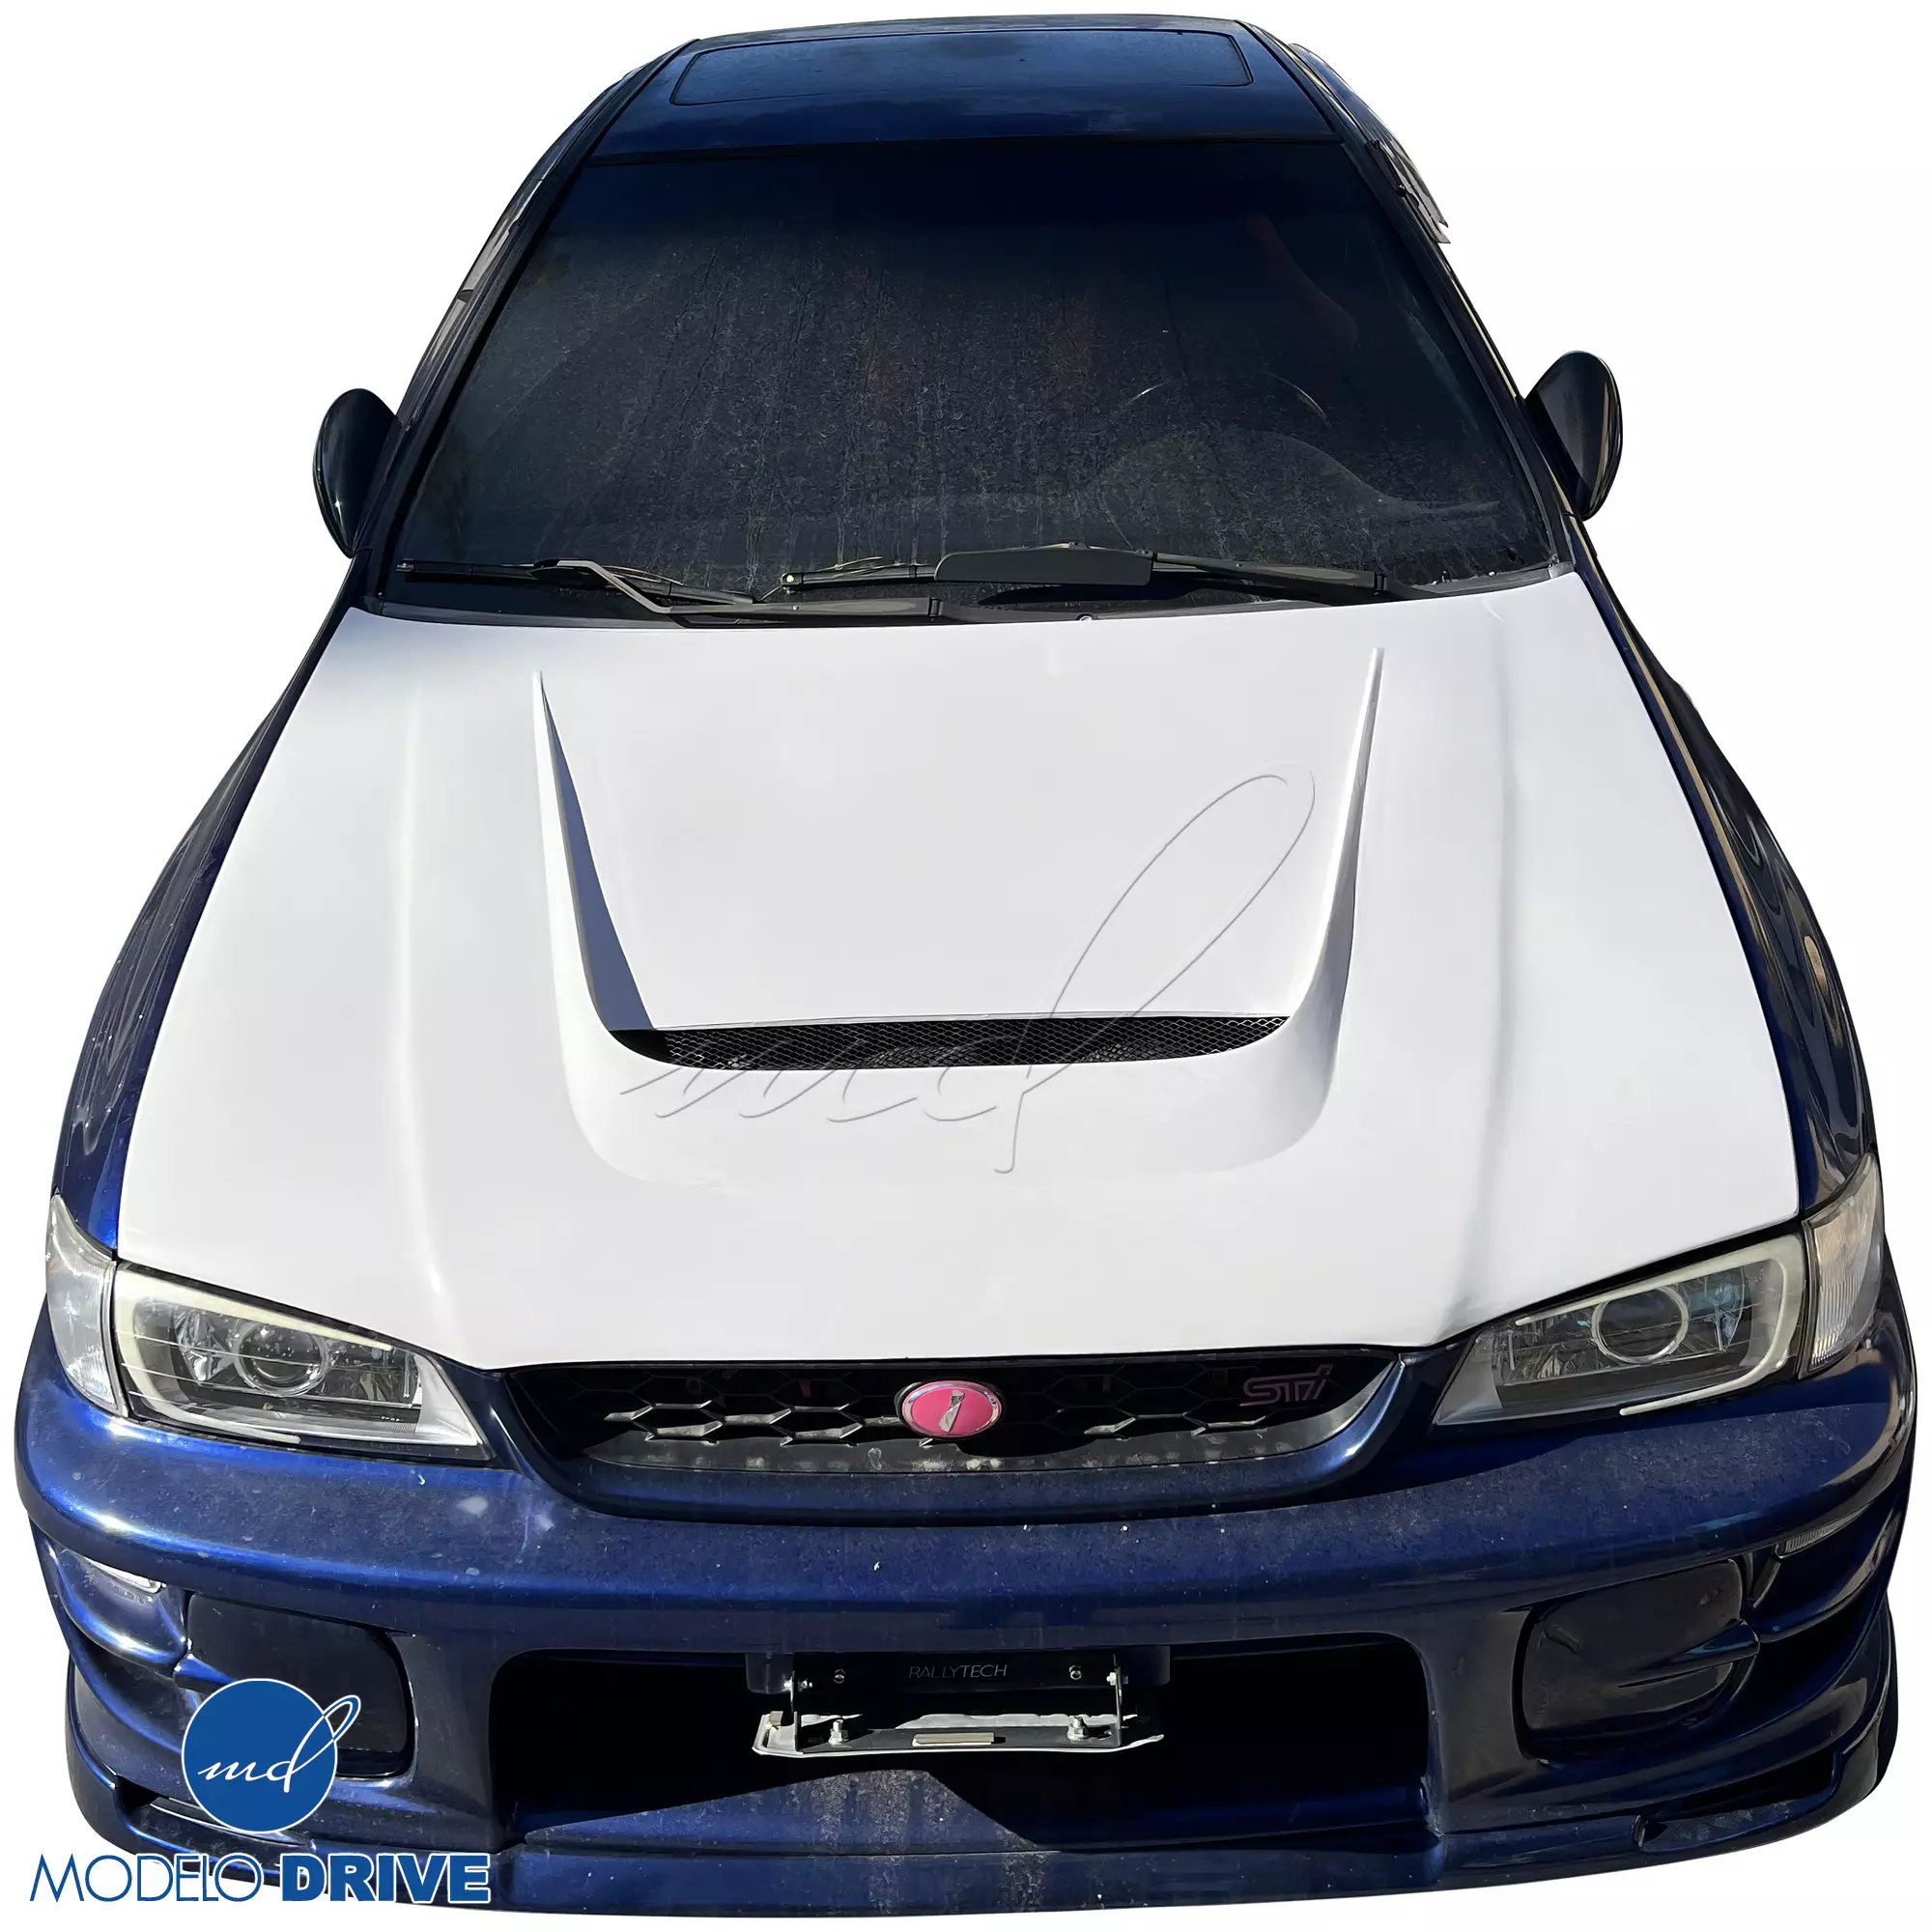 ModeloDrive FRP GKAT Hood > Subaru Impreza (GC8) 1993-2001 > 2/4/5dr - Image 8